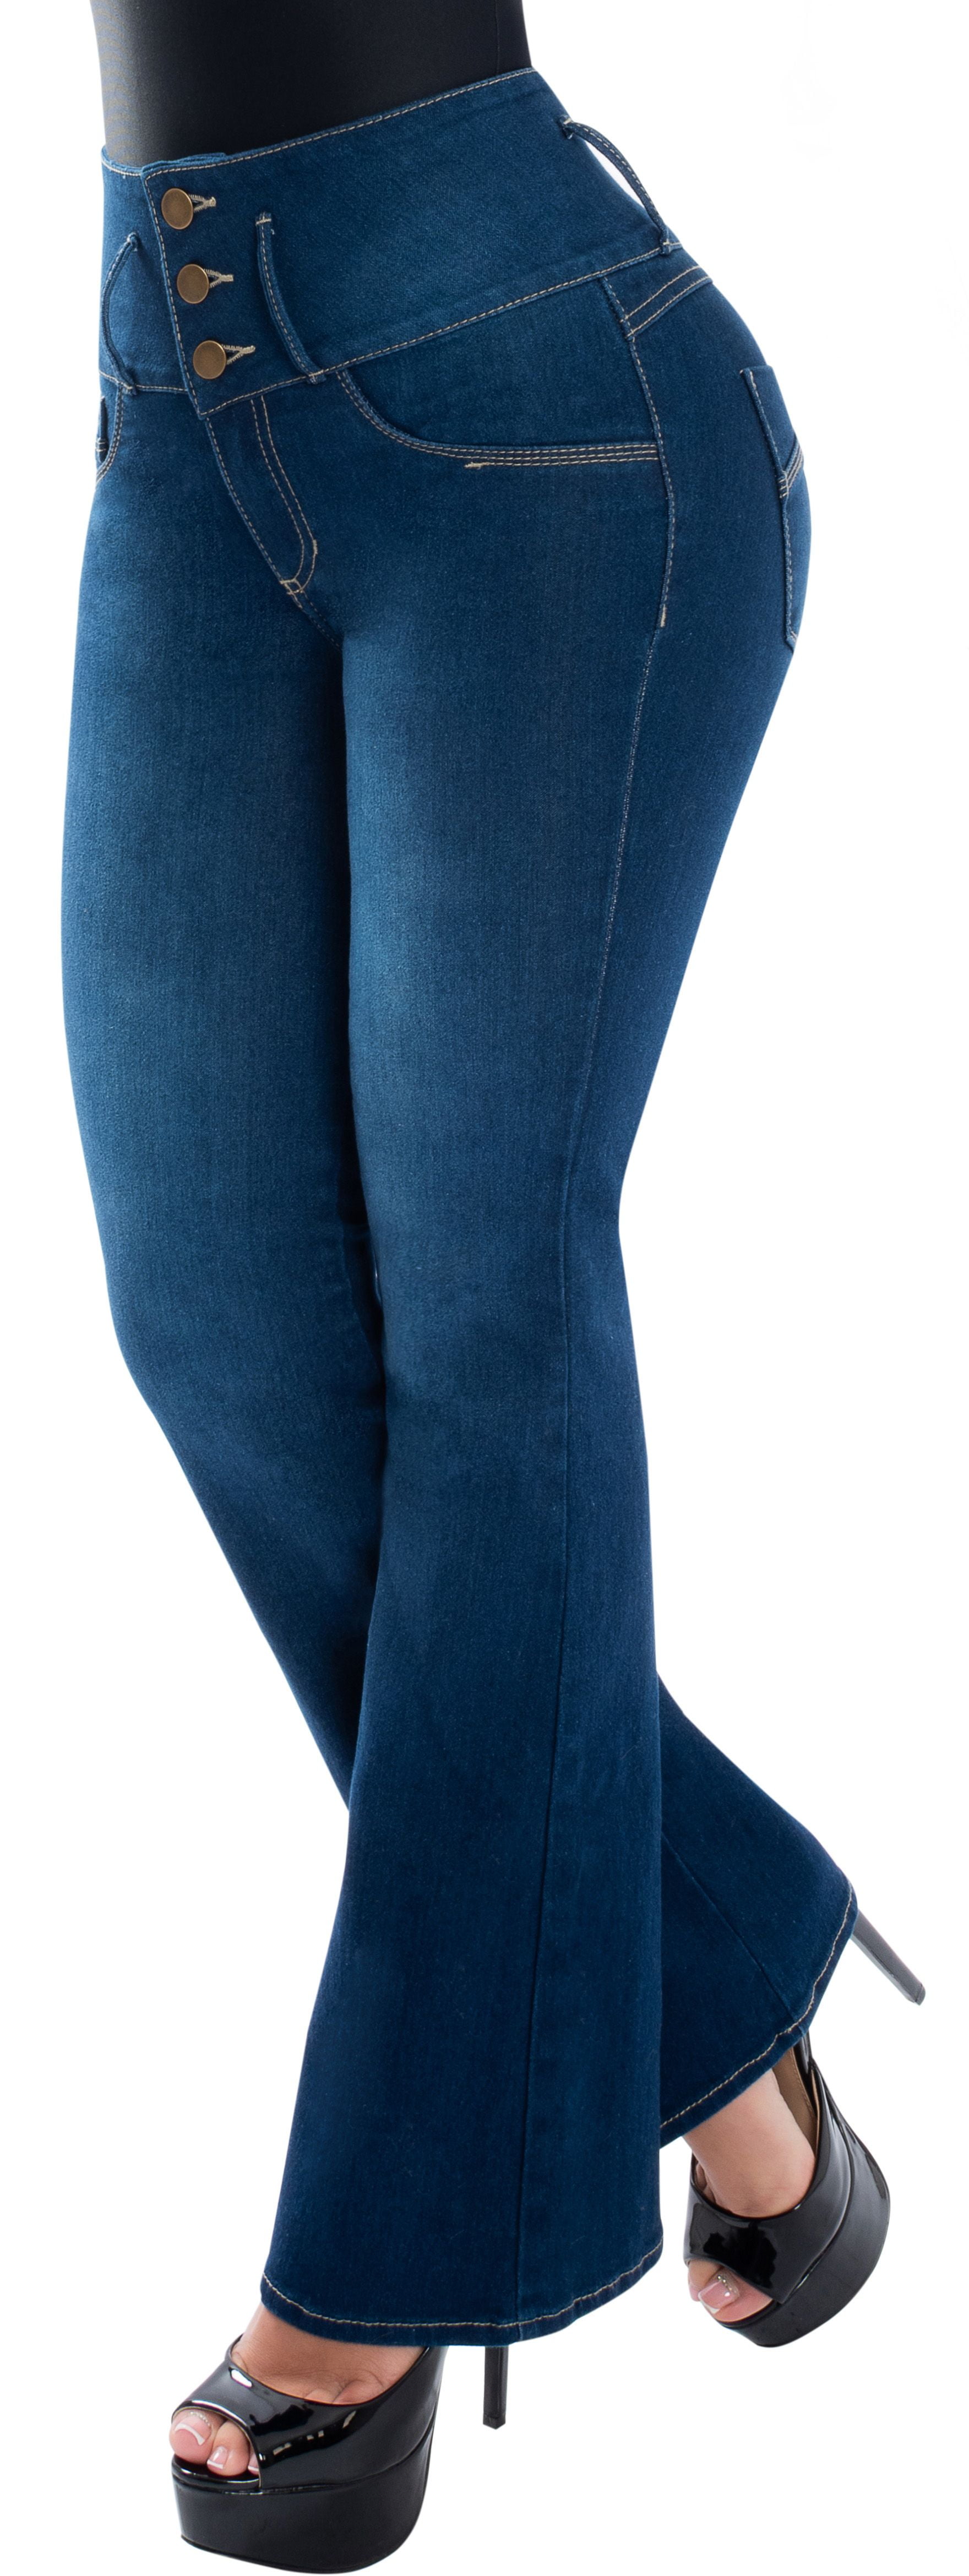 Jeans colombianos butt lifter fajas colombianas bbl levanta cola Bon Bon Up  6405 джинсы V62726832Bottoms Size (Women's): 16 COL- 11 USA купить по  выгодной цене от 95 руб. в интернет-магазине  с